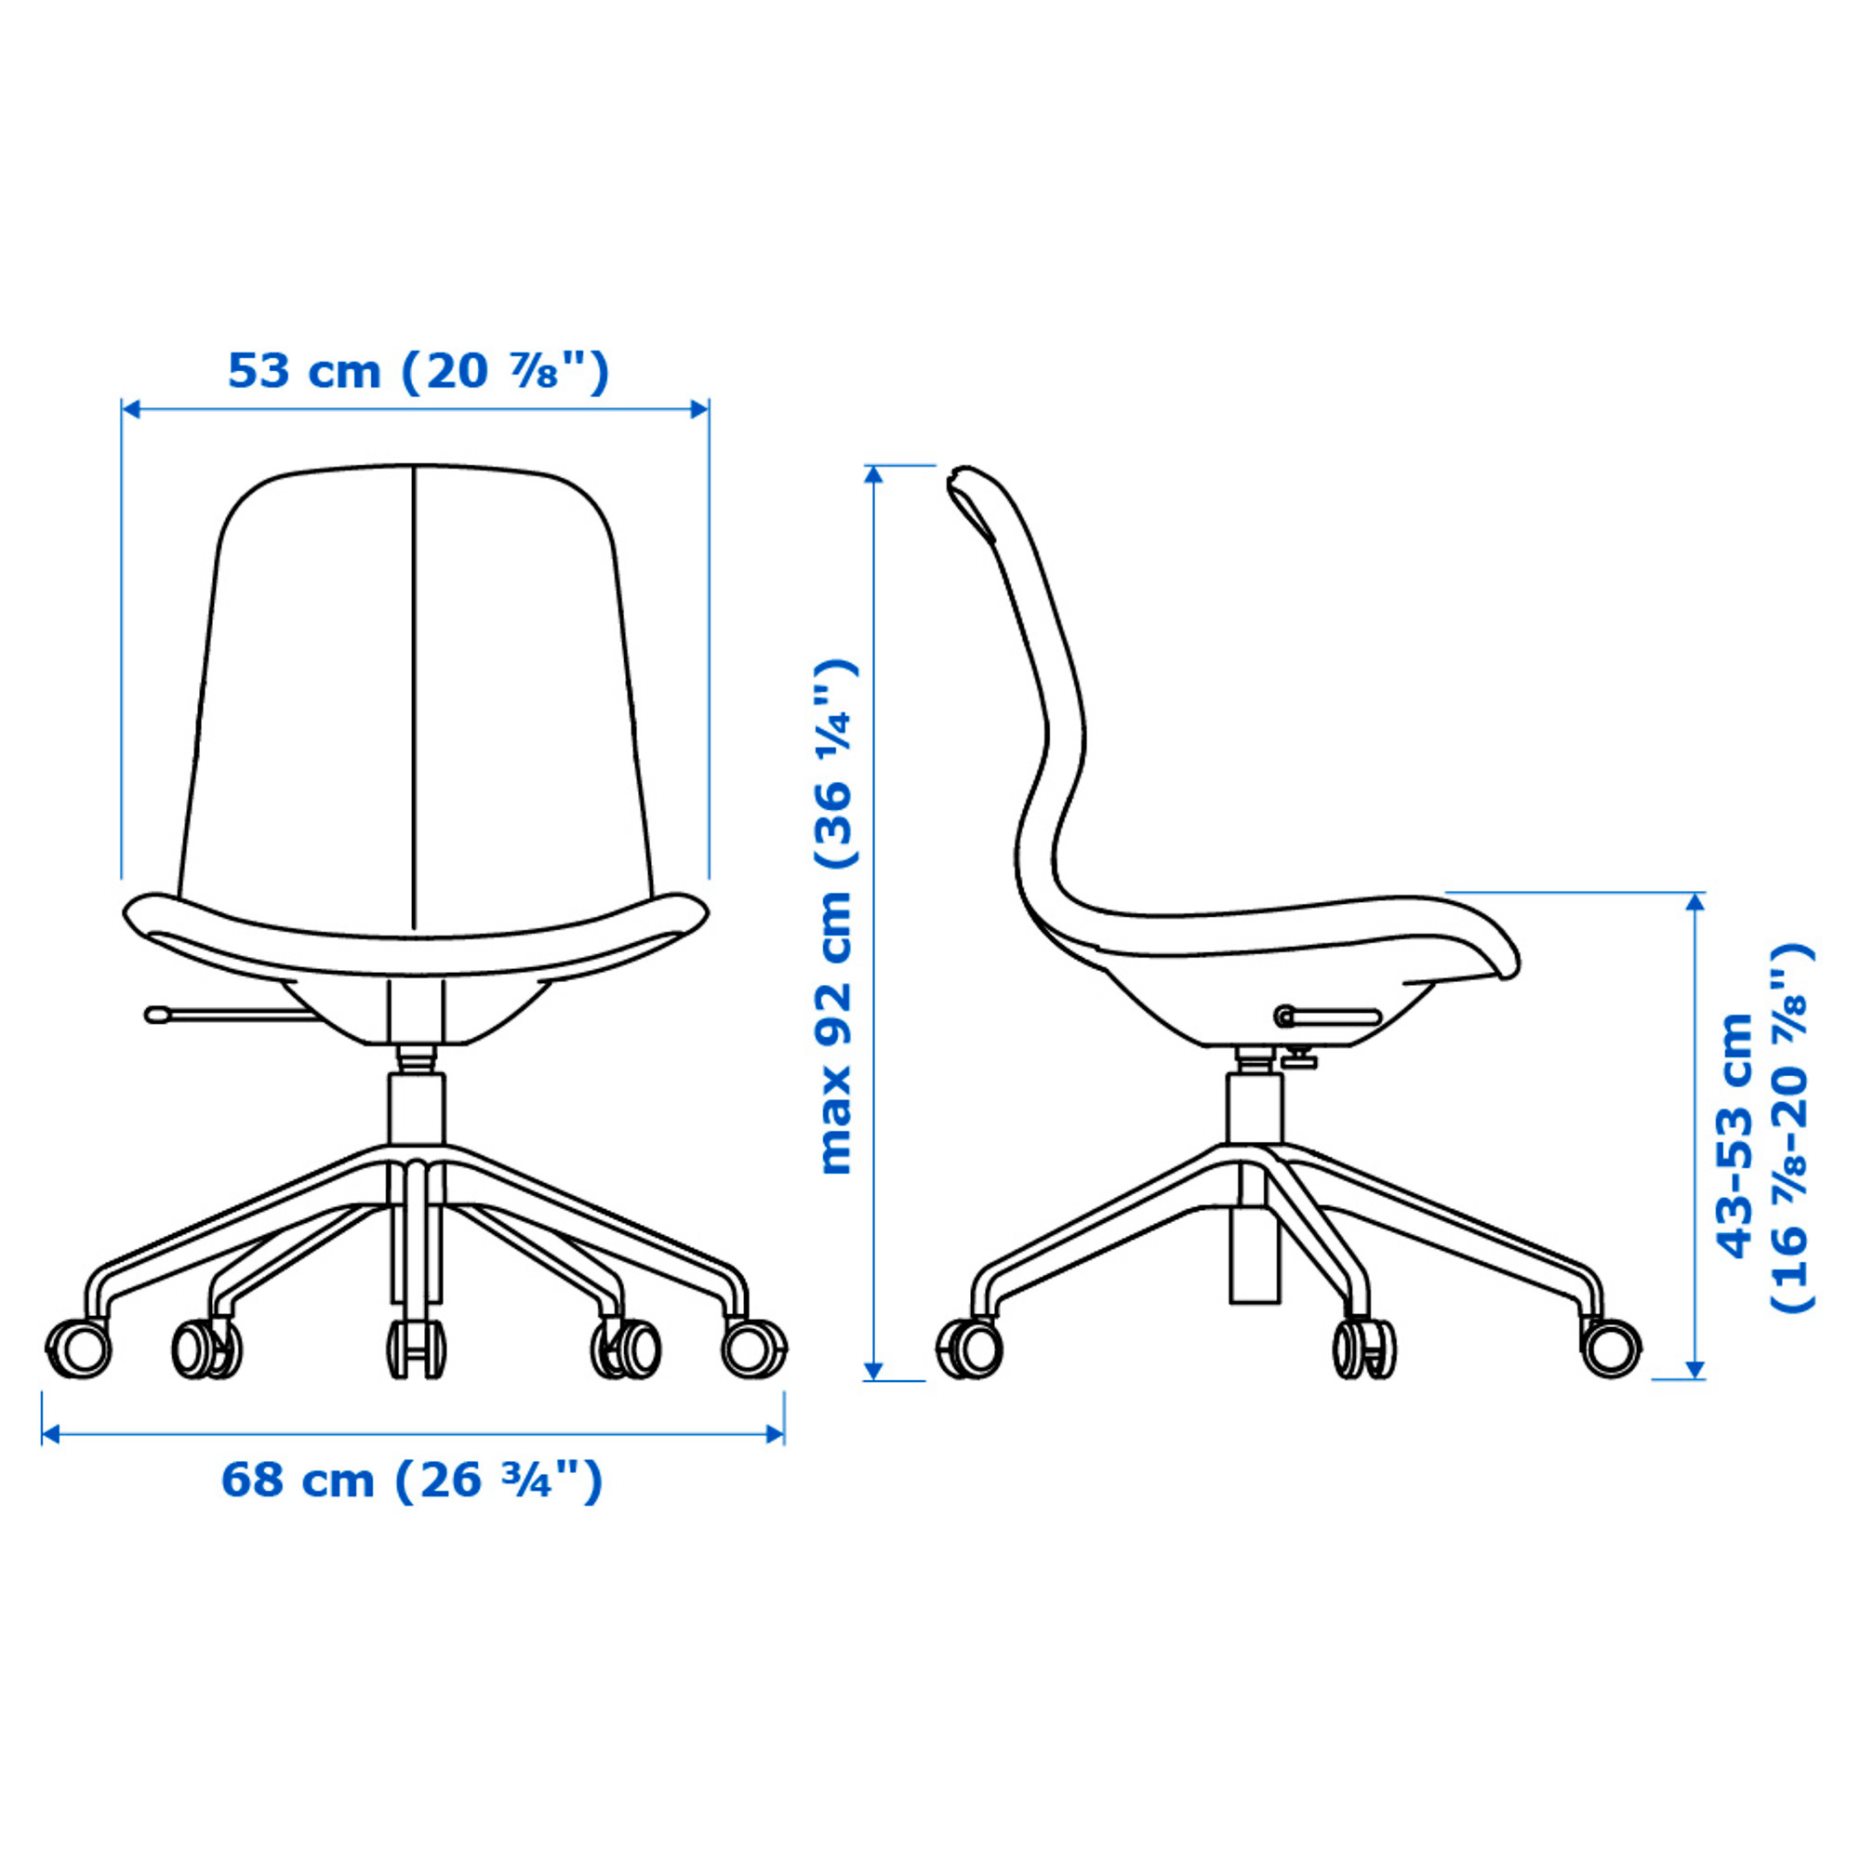 TROTTEN/LANGFJALL/BESTA/LAPPVIKEN, desk and storage combination with swivel chair, 994.365.88